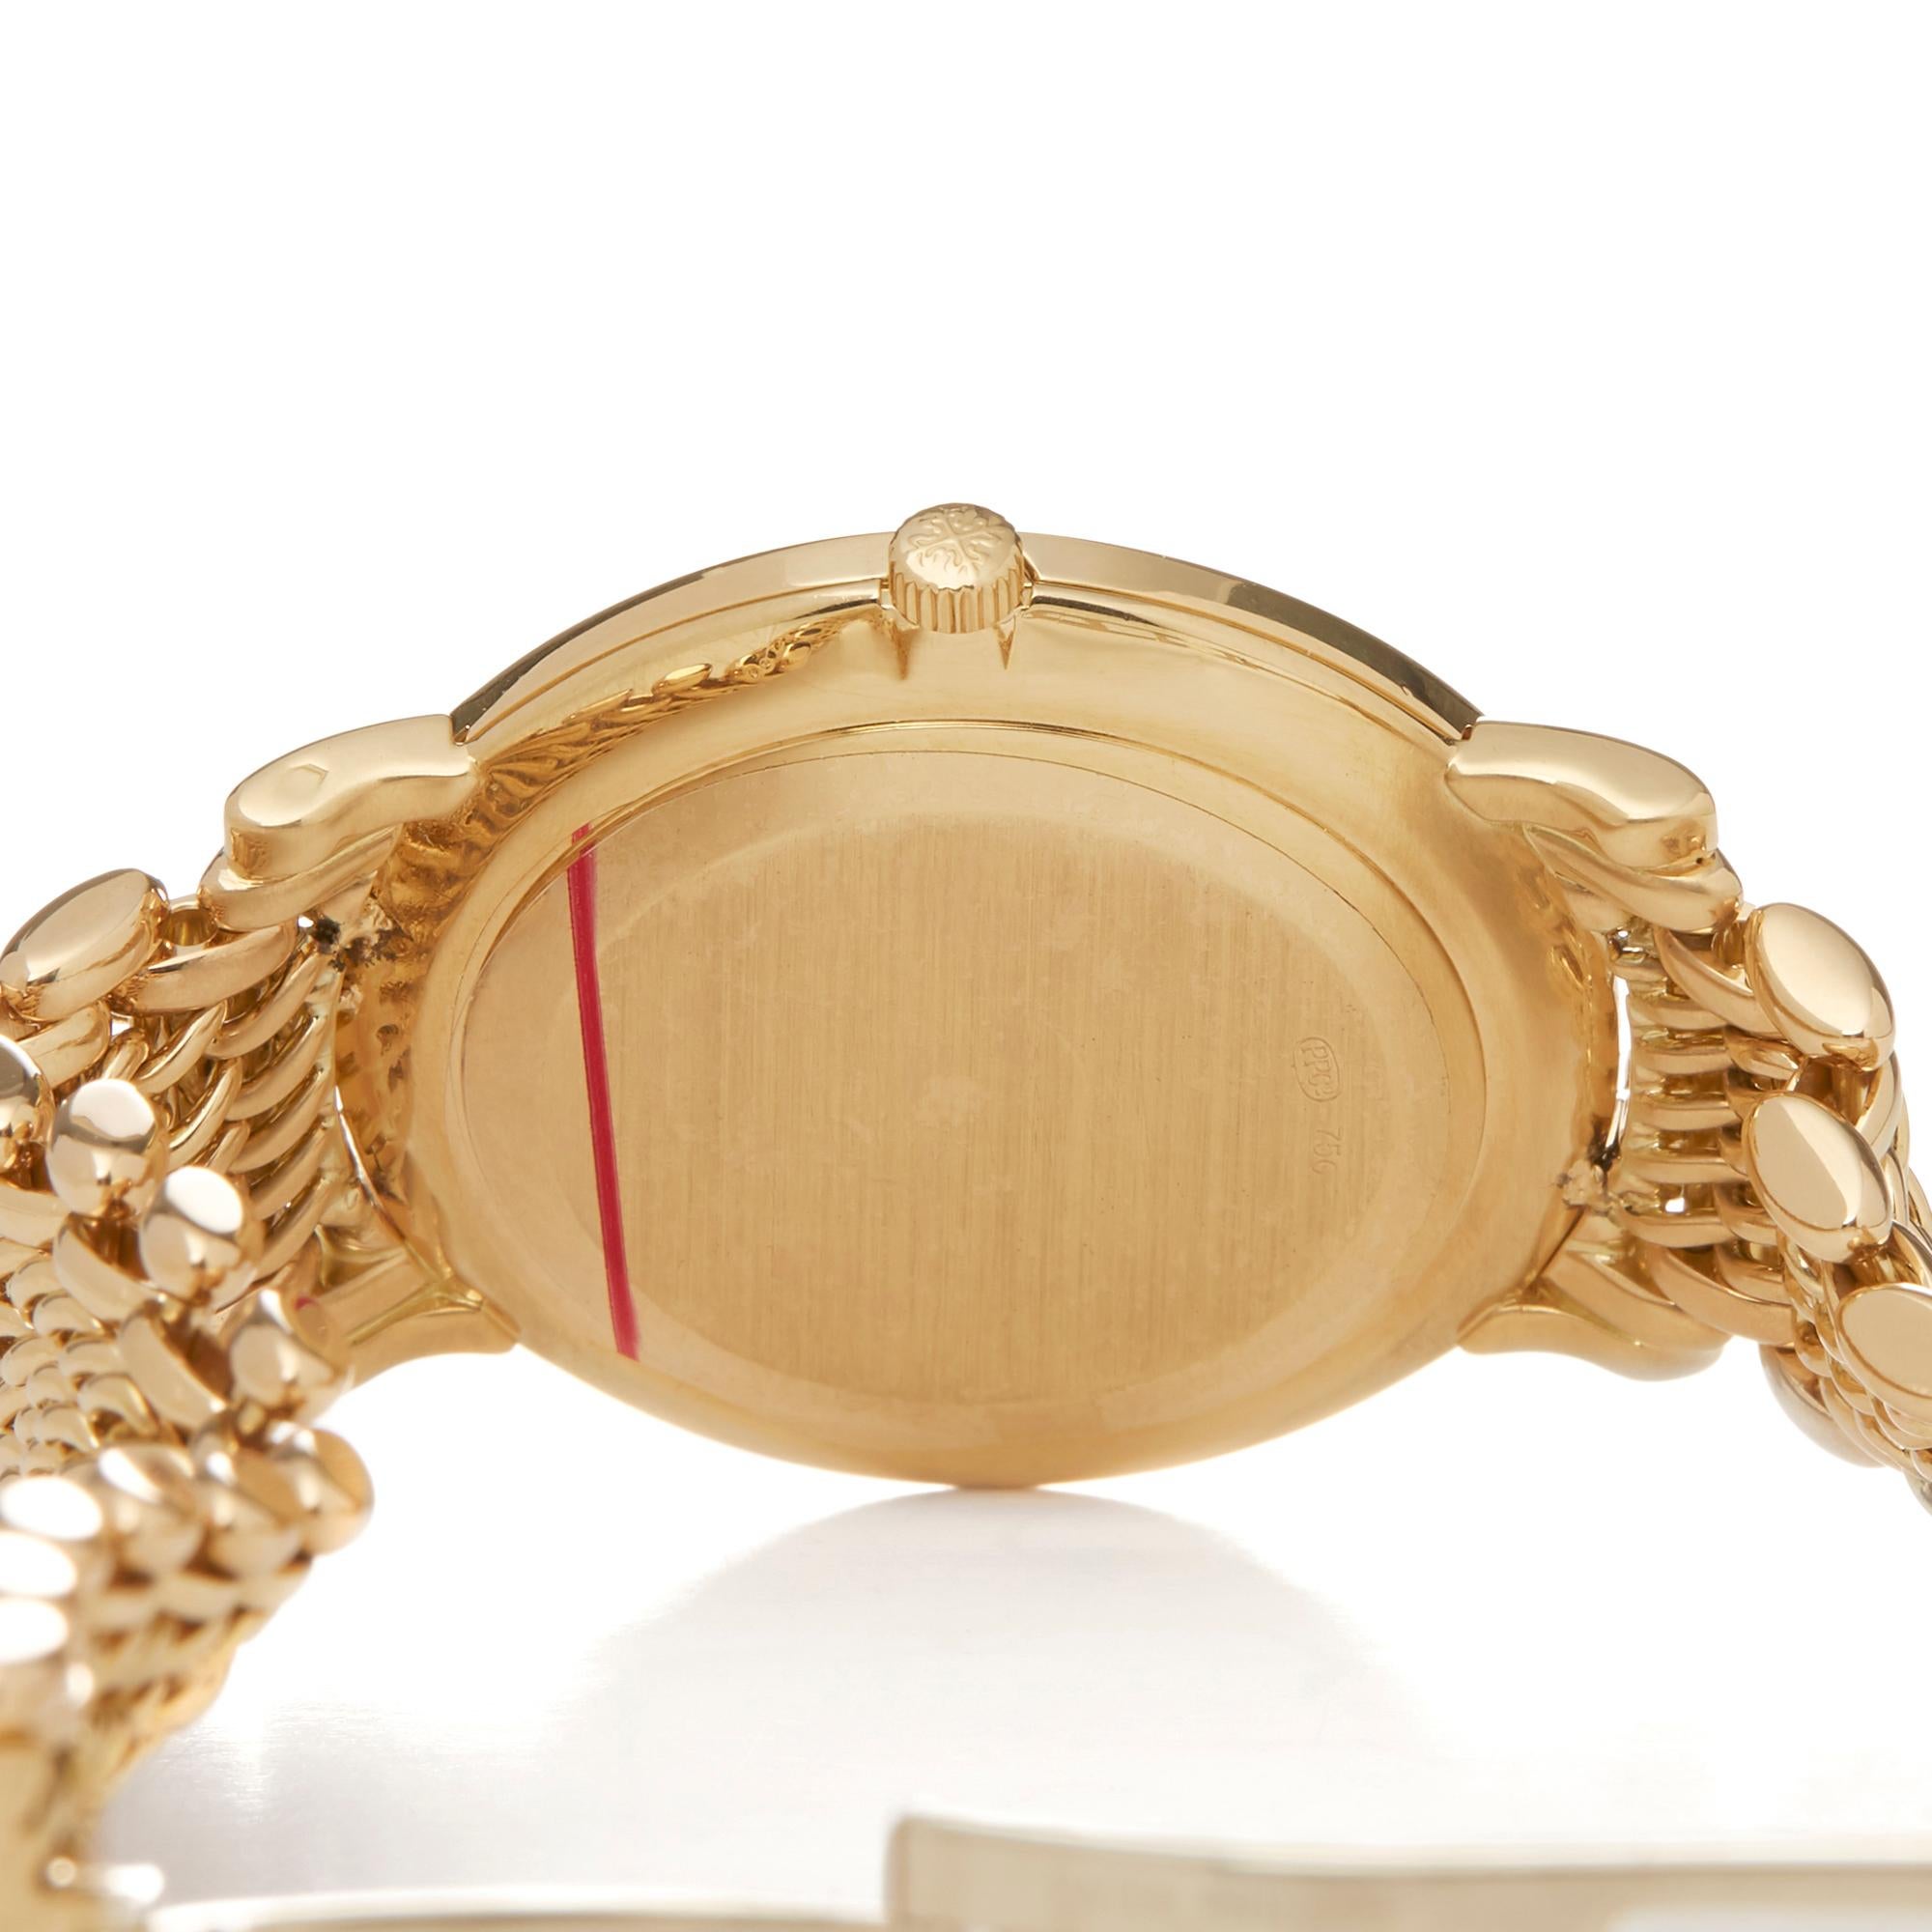 Patek Philippe Calatrava 18K Yellow Gold 5522/1 Wristwatch 3